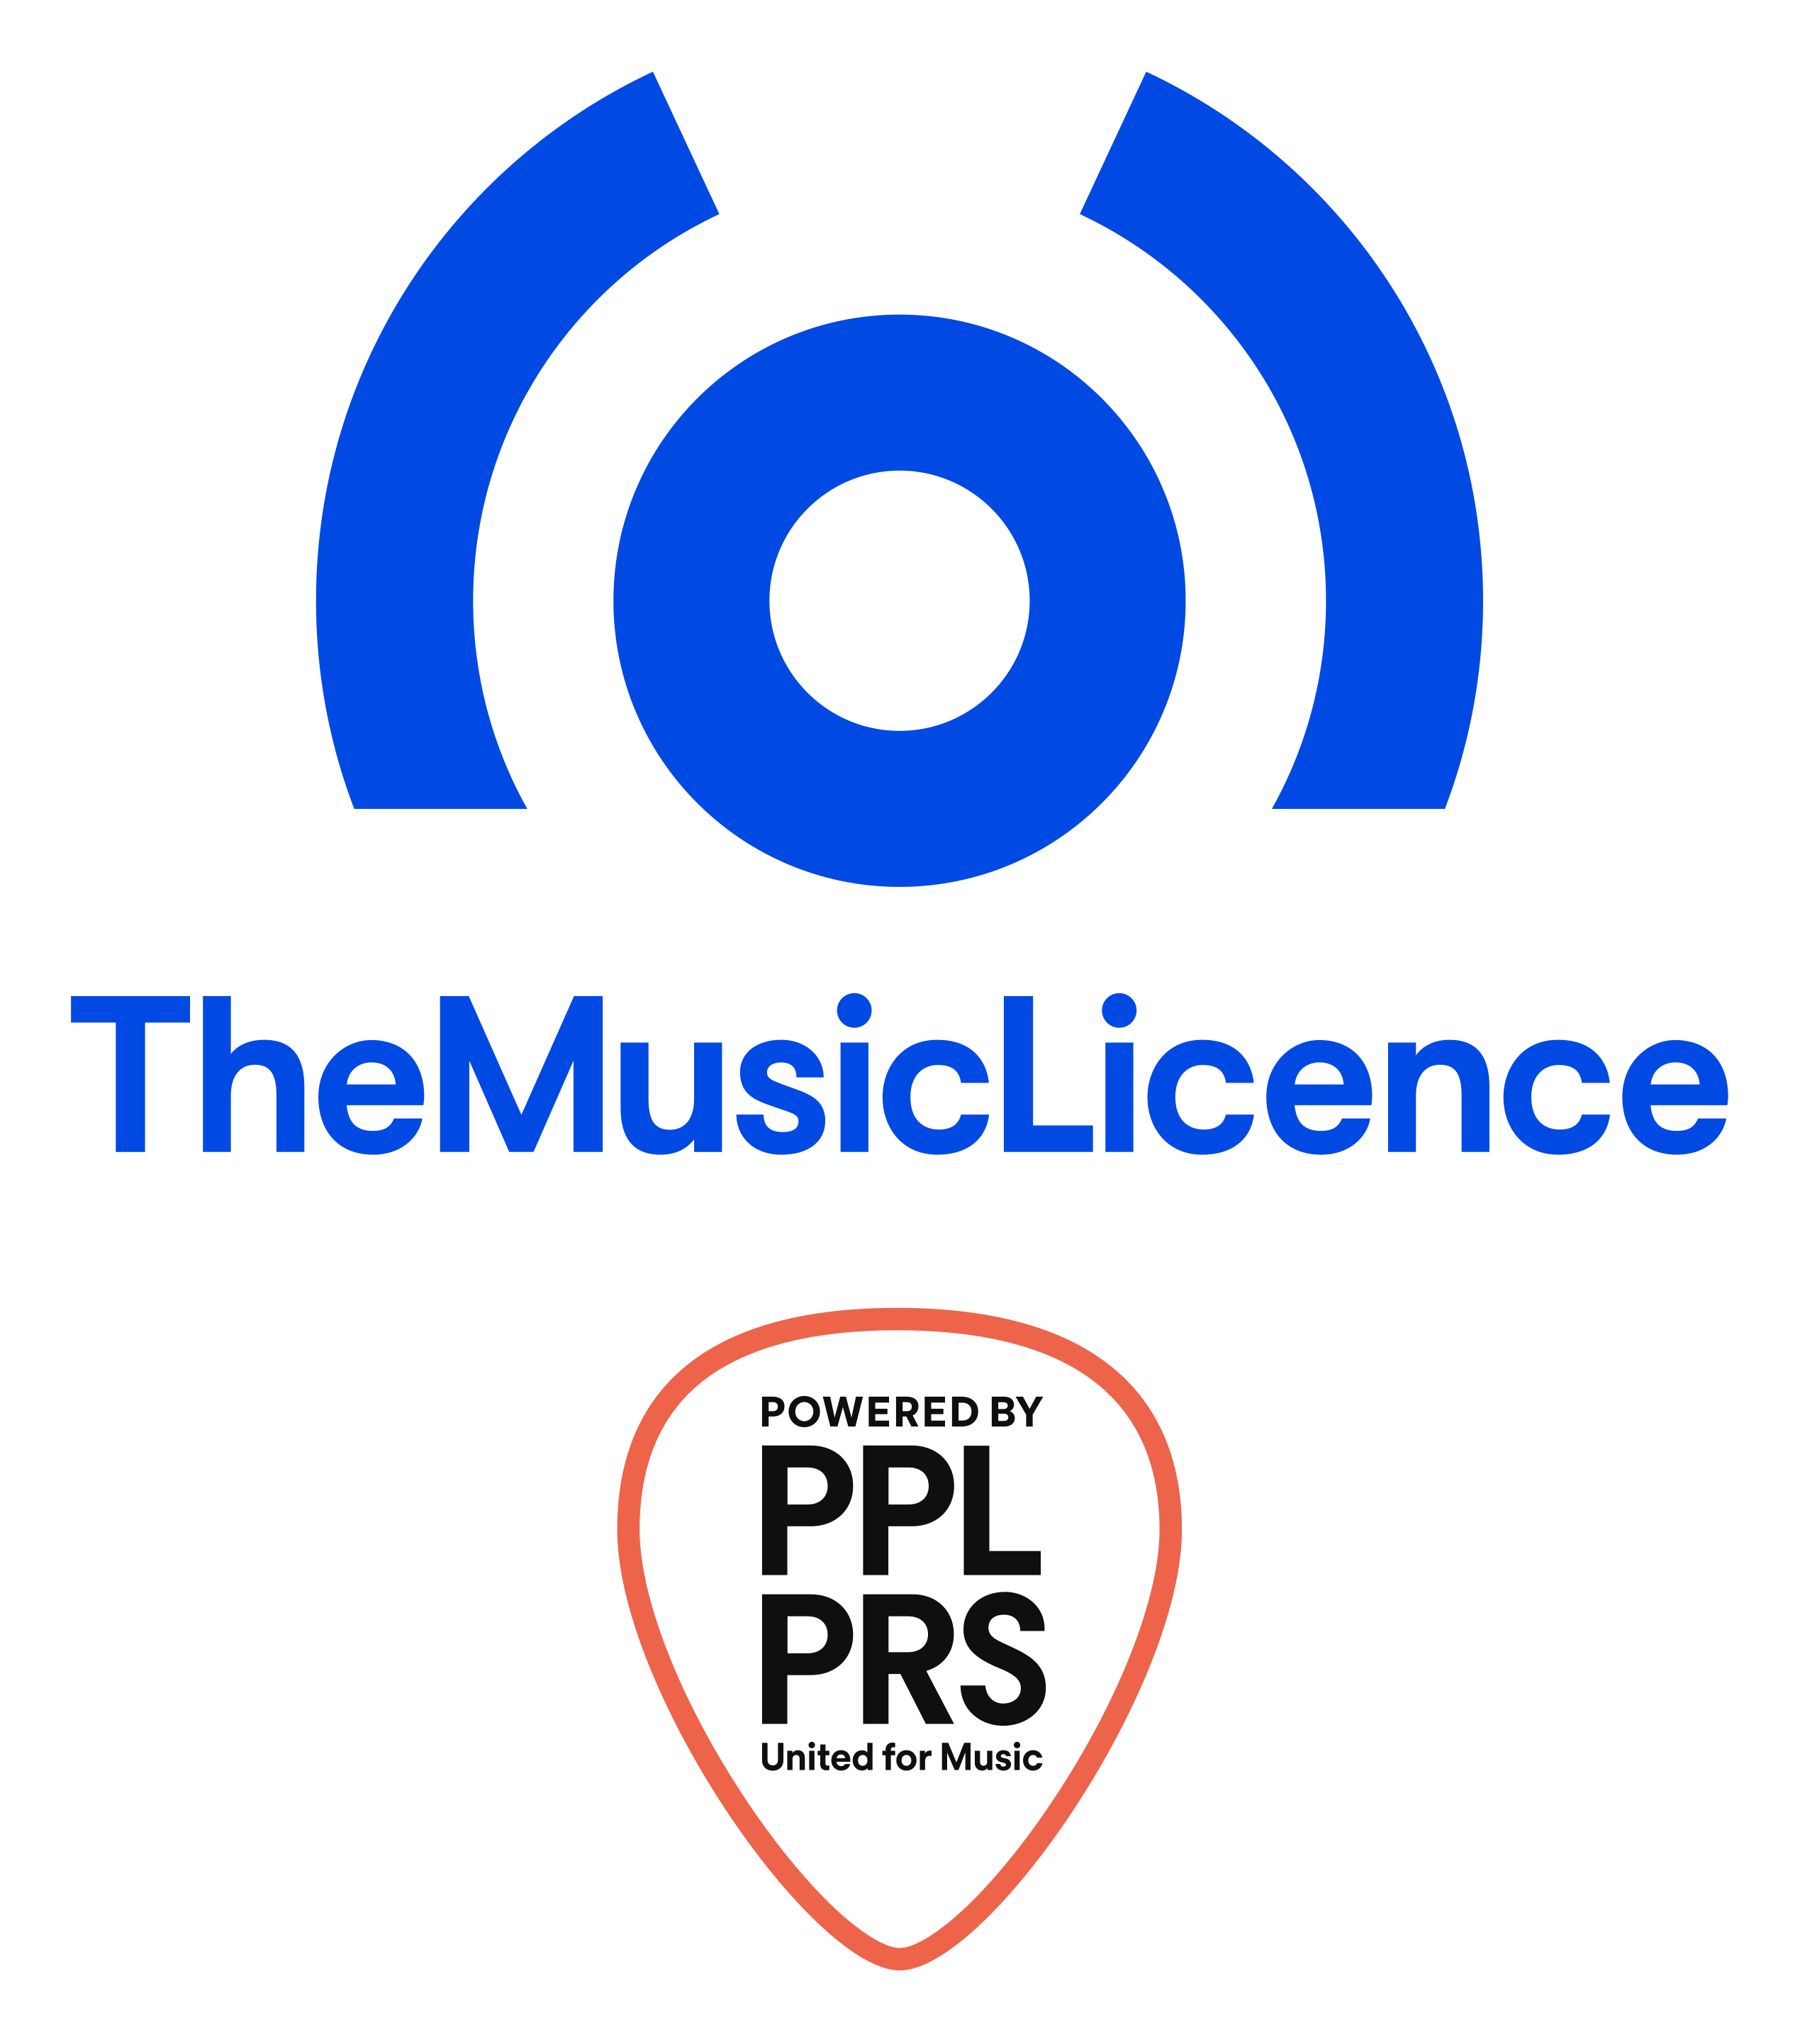 The Musical License logo